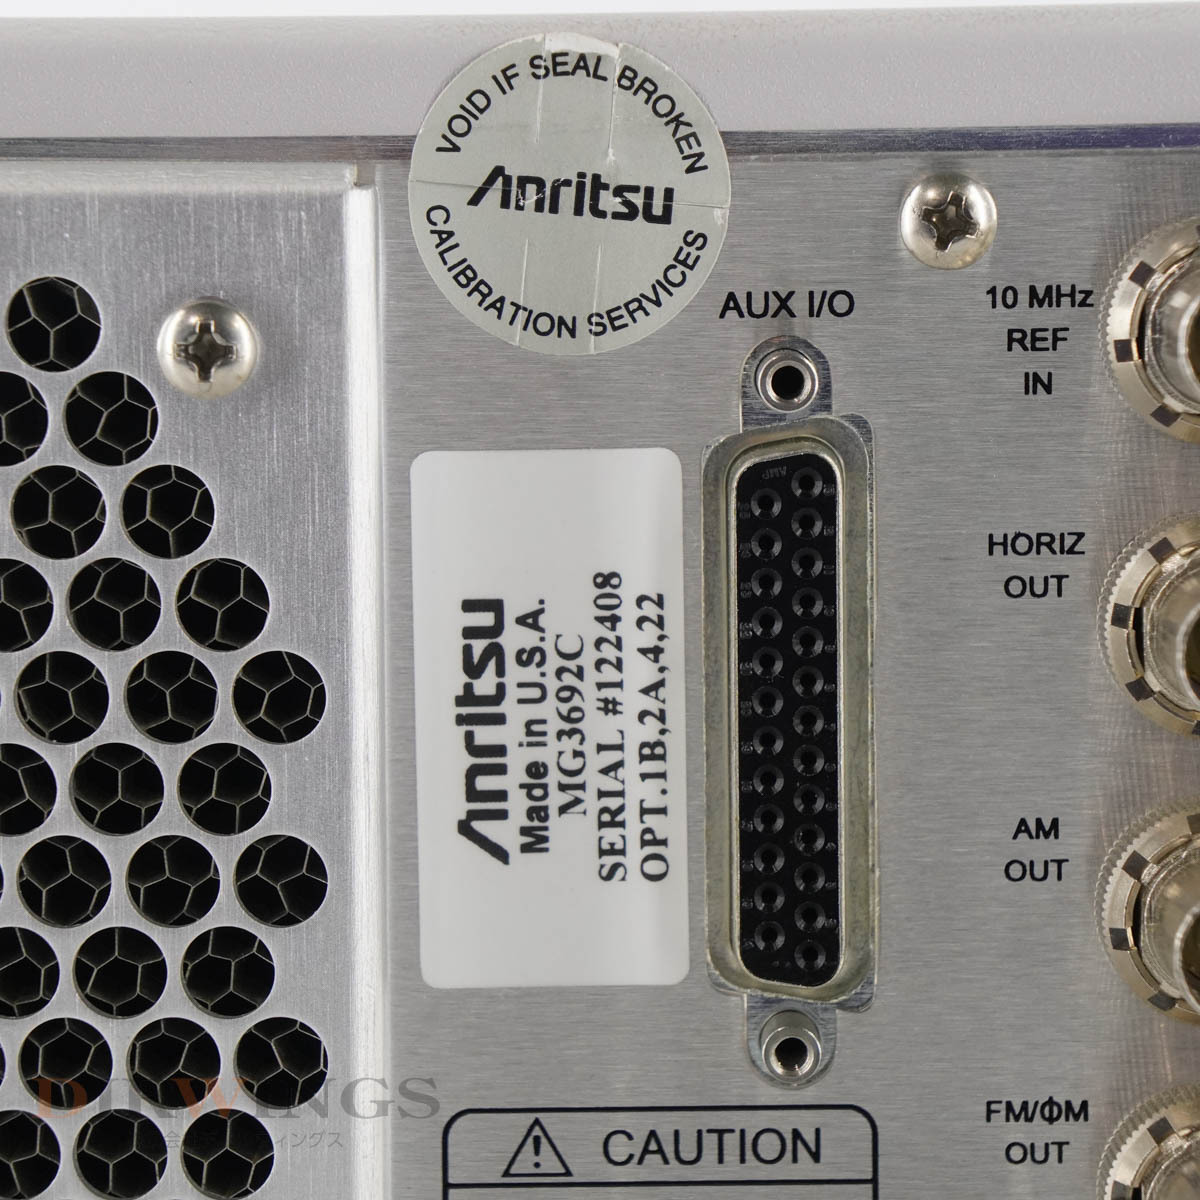 [JB] гарантия нет MG3692C Anritsu OP1B 2A 4 22 20GHz 34RKNF50 Anne litsuSIGNAL GENERATOR сигнал генератор сигнал генератор..[05899-0053]